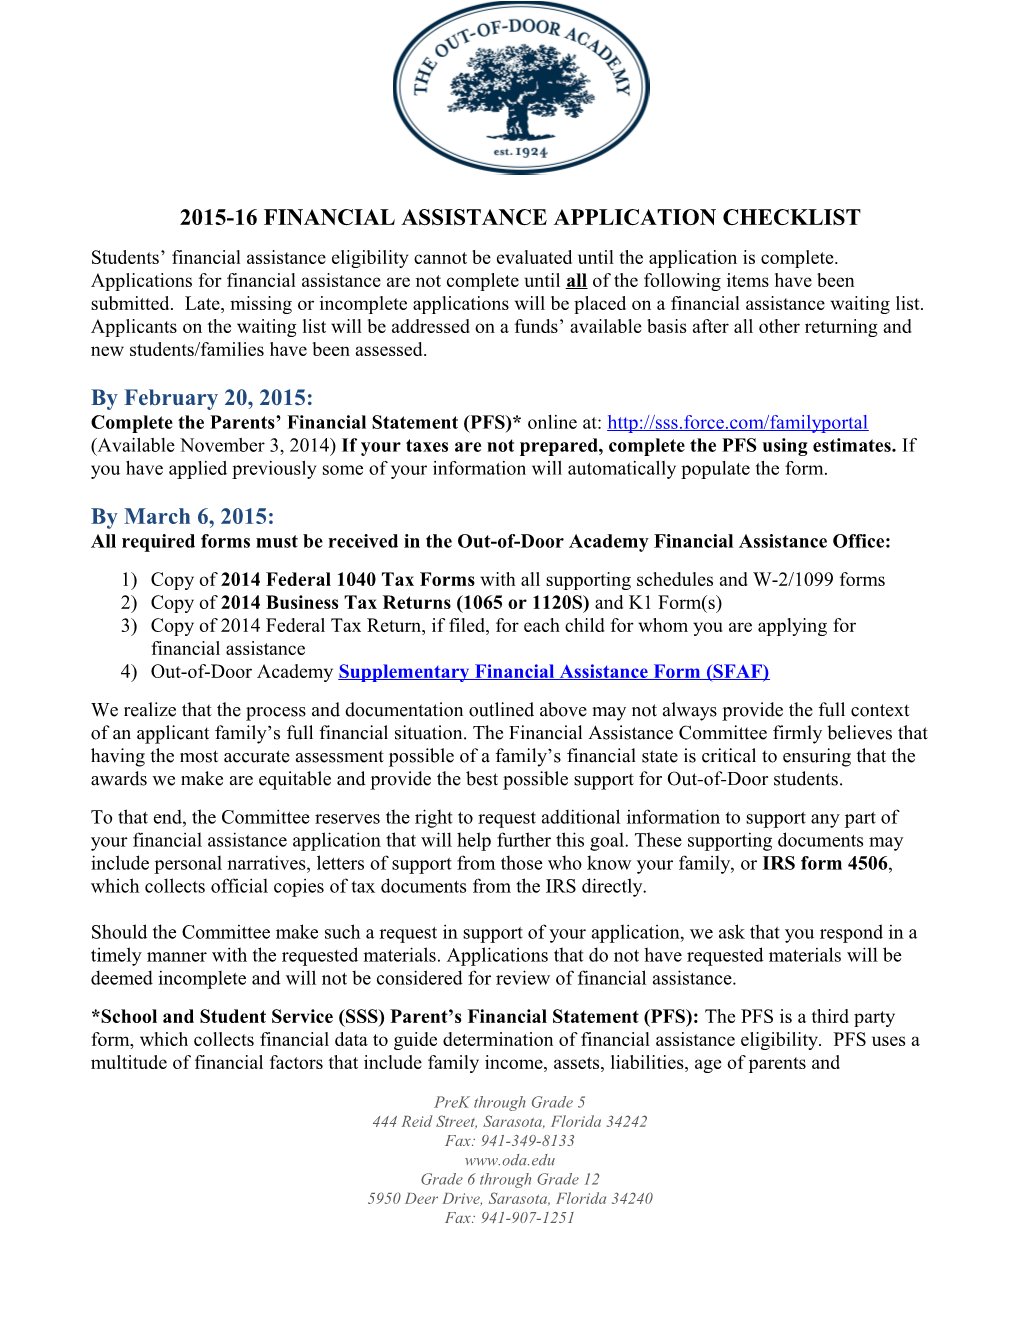 2015-16 Financial Assistance Application Checklist